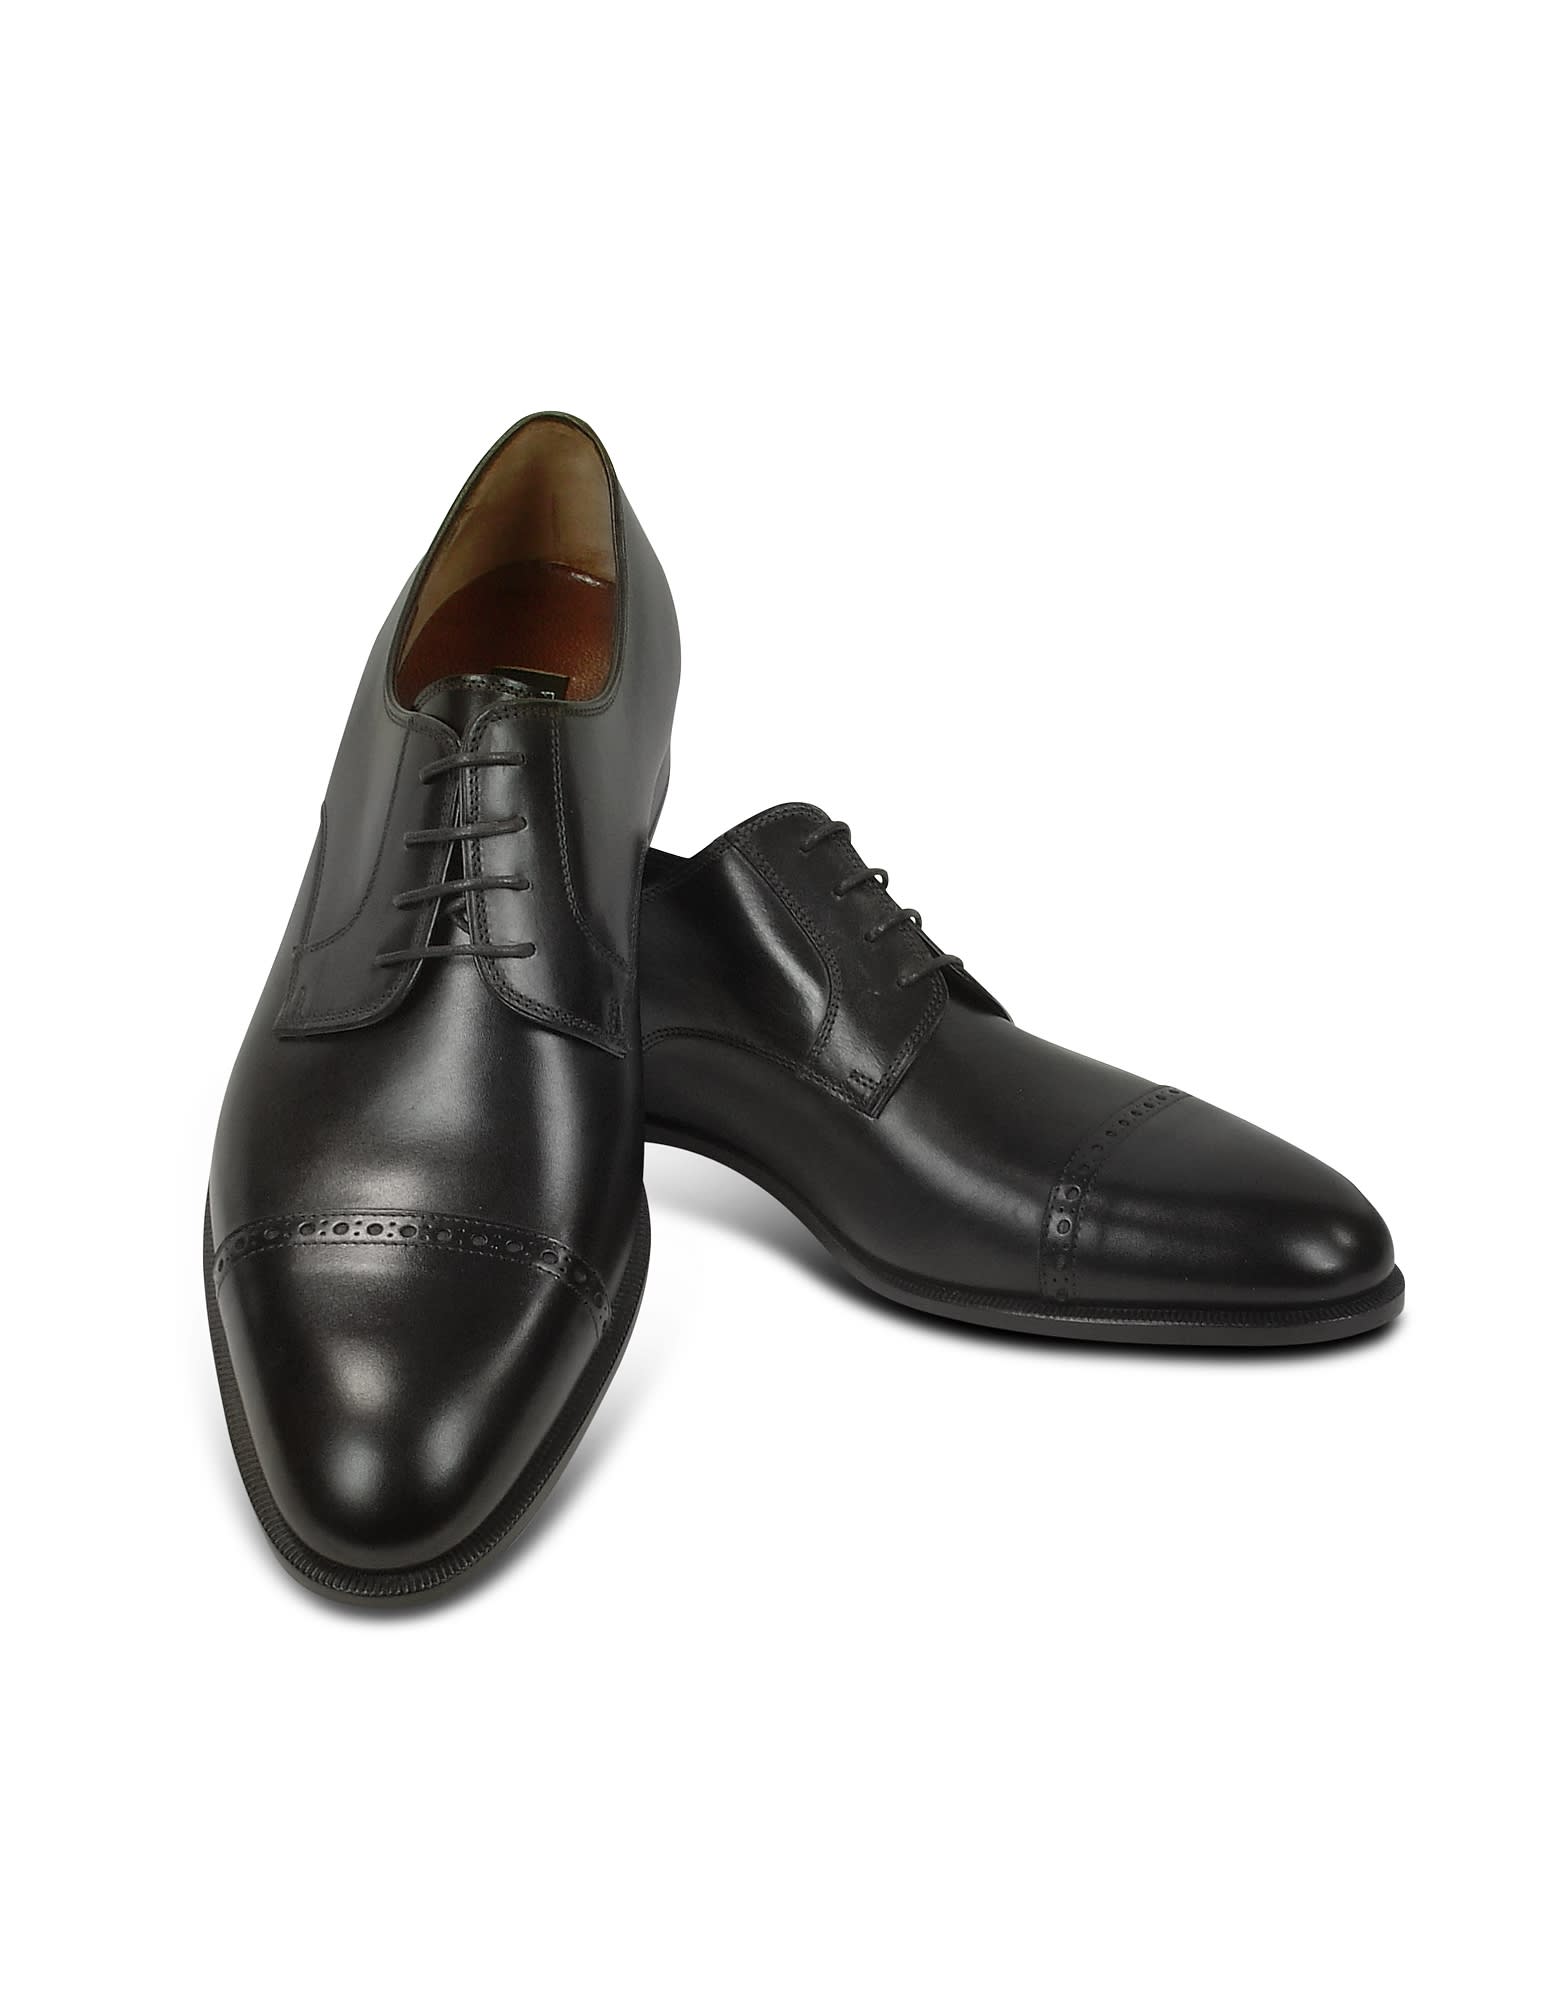 Fratelli Rossetti Black Calf Leather Cap Toe Oxford Shoes